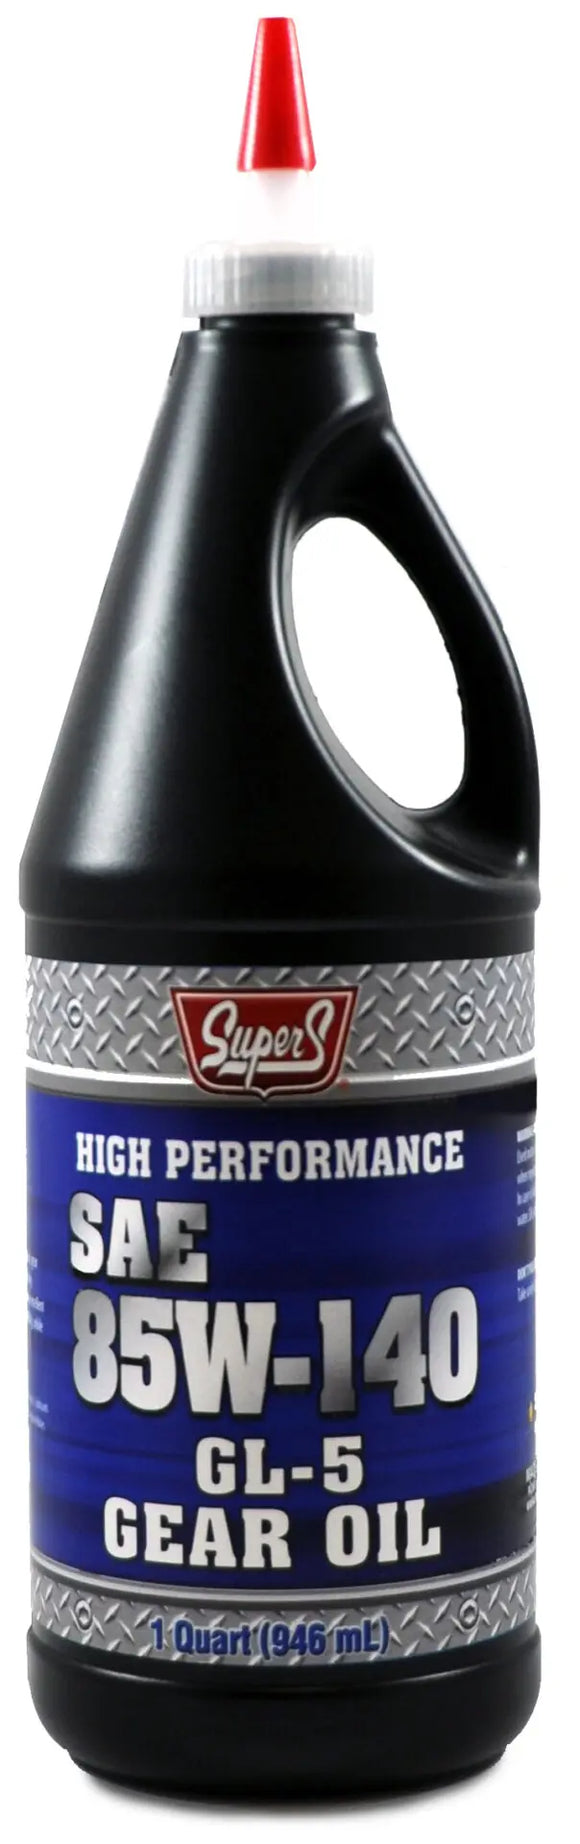 Smittys Supply Super S SAE 85W-140 GL-5 Gear Oil 1 Quart